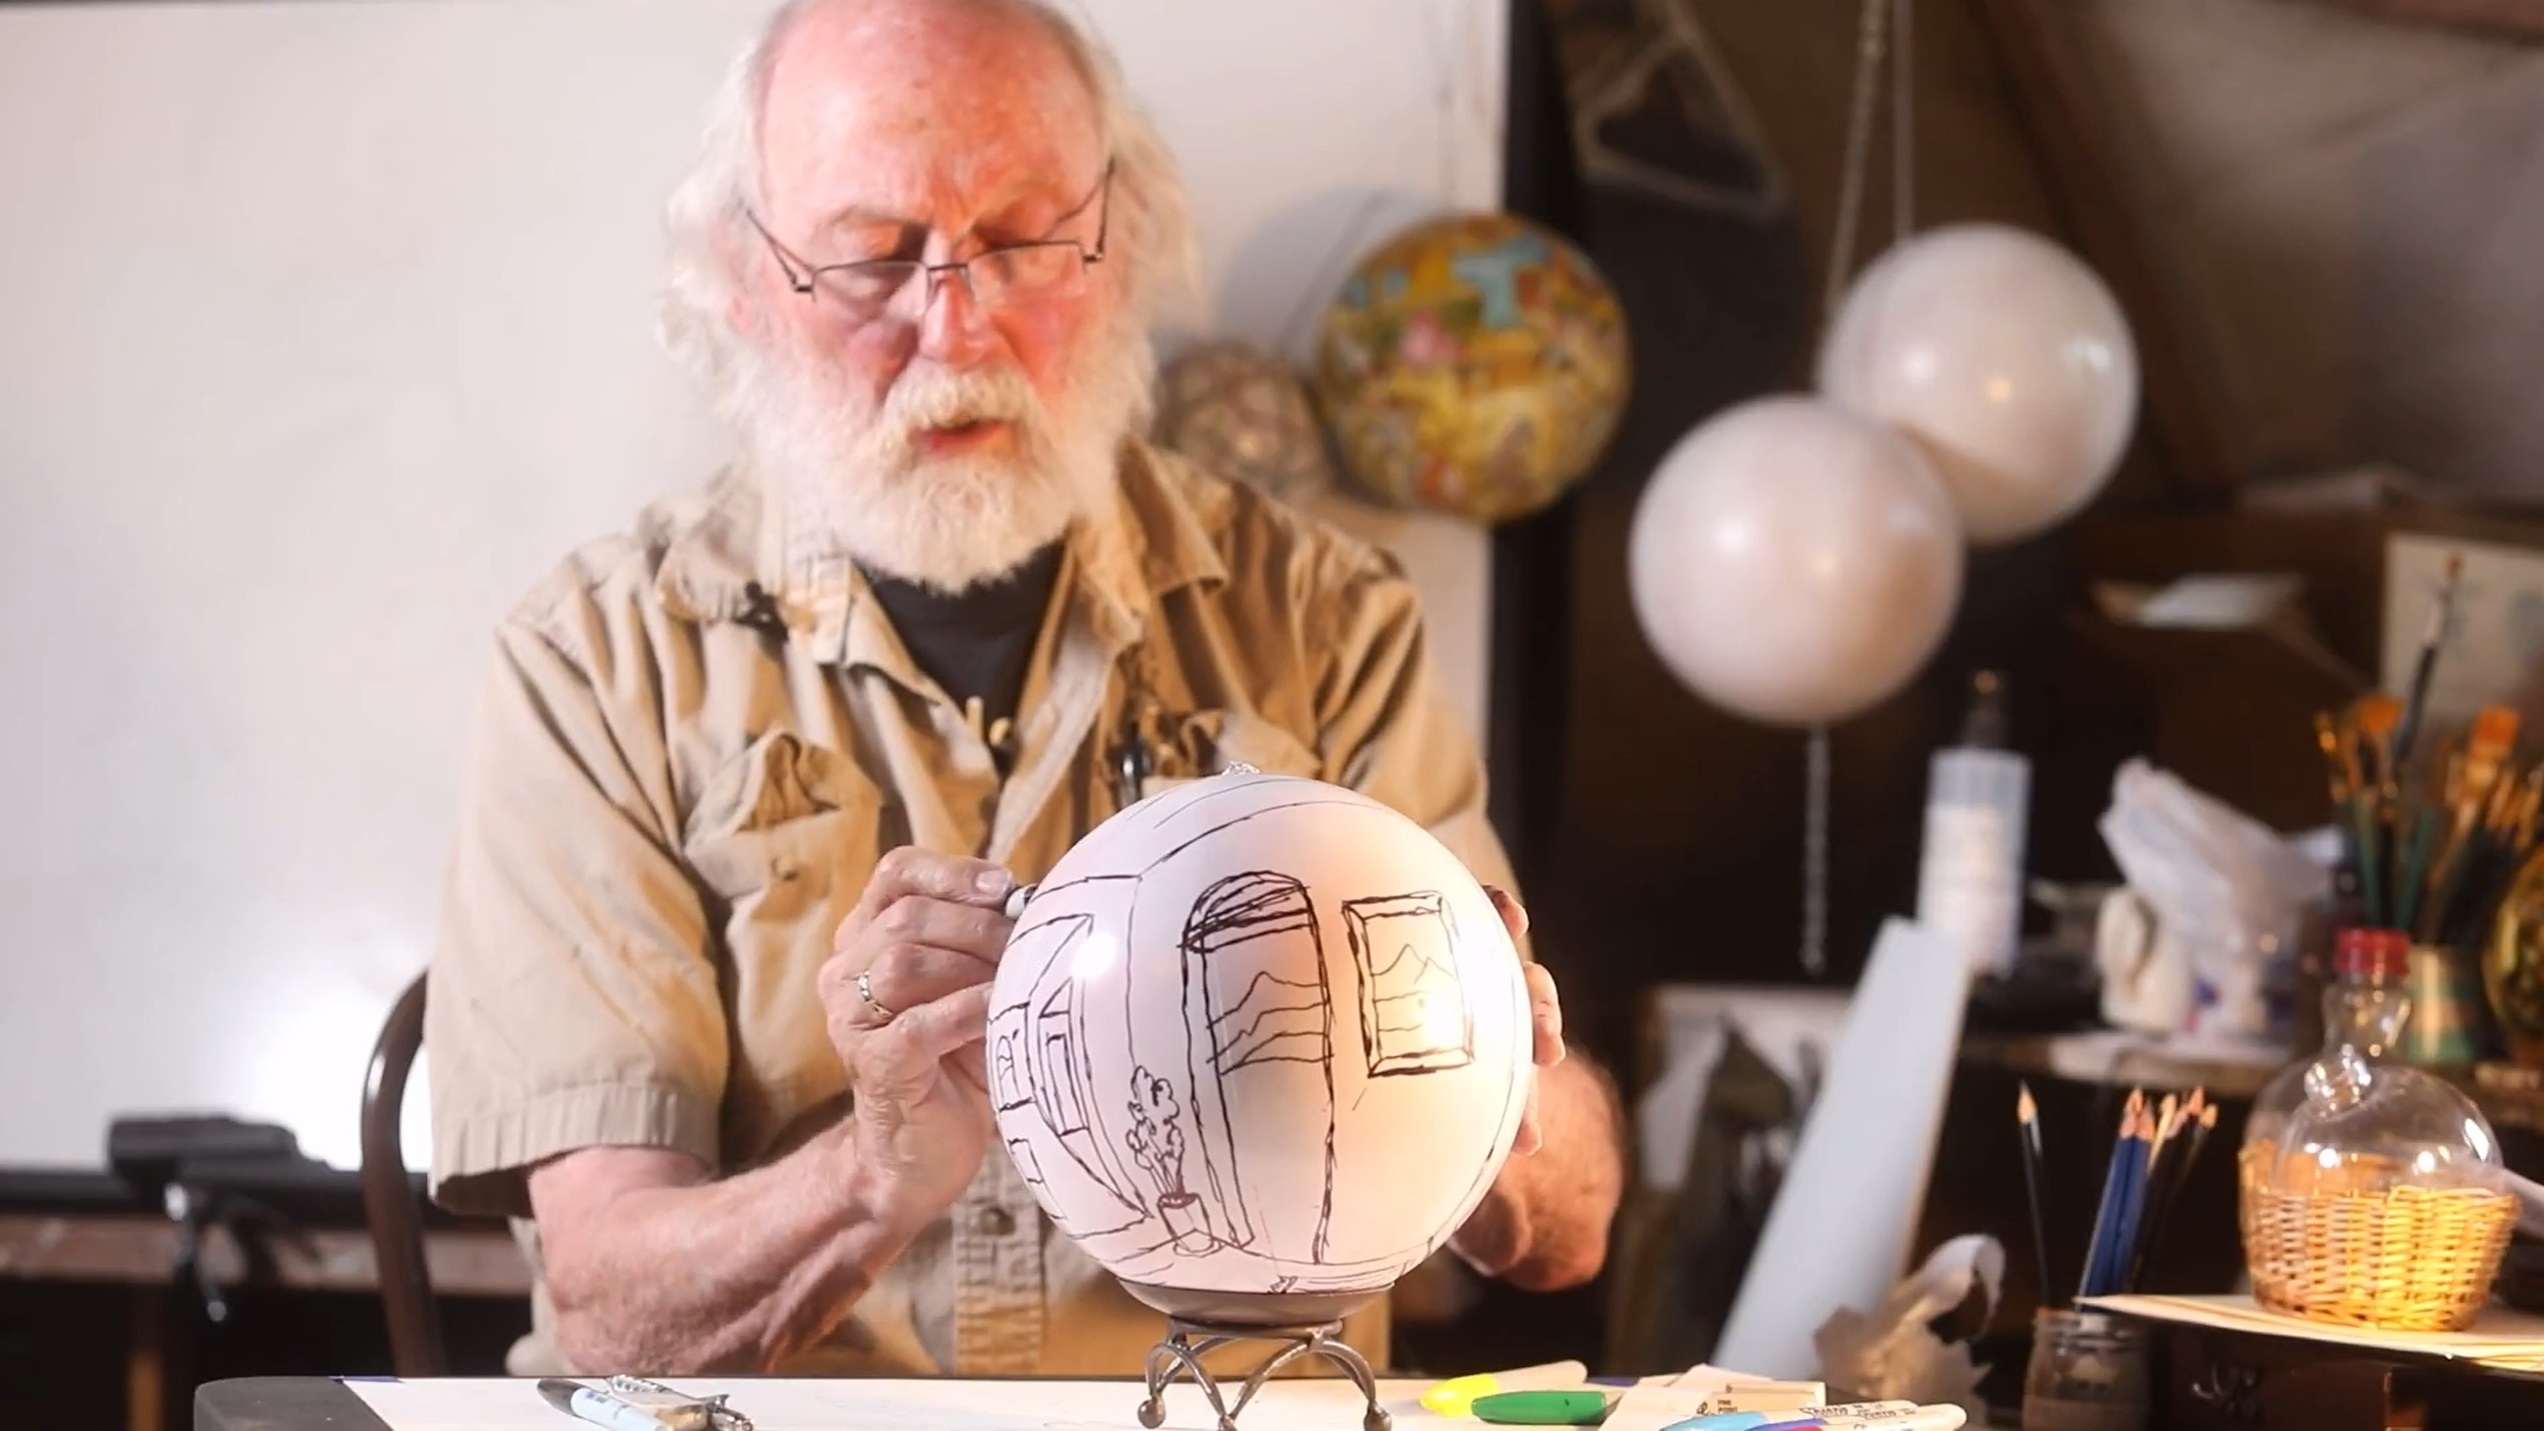 Artist and BHSU Alumnus Dick Termes works on one of his famous Termespheres